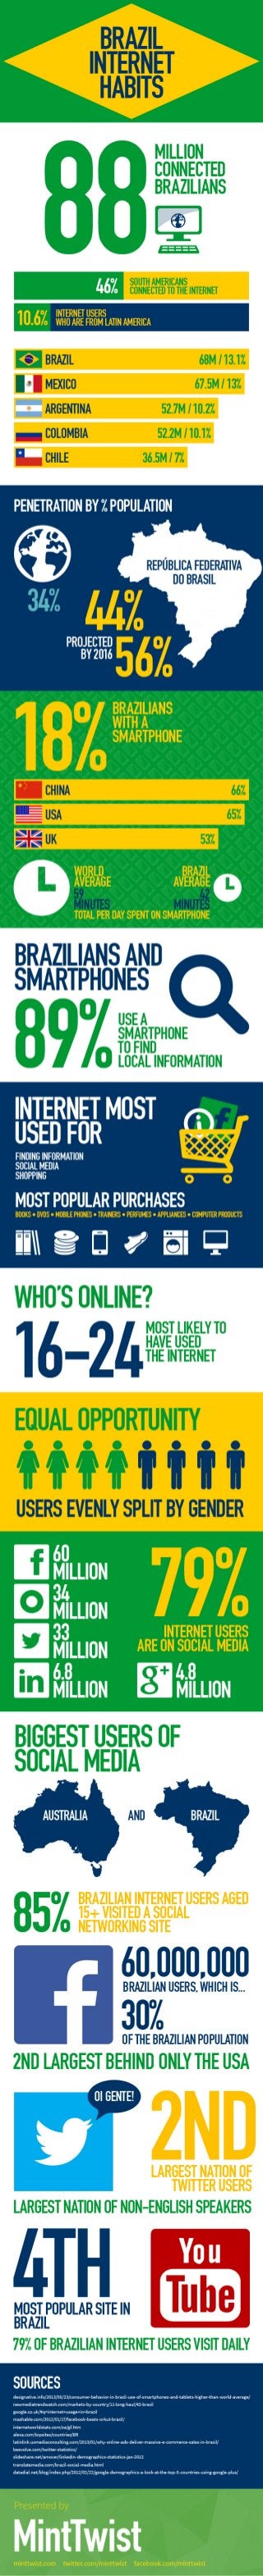 Brazil internet habits - infographic